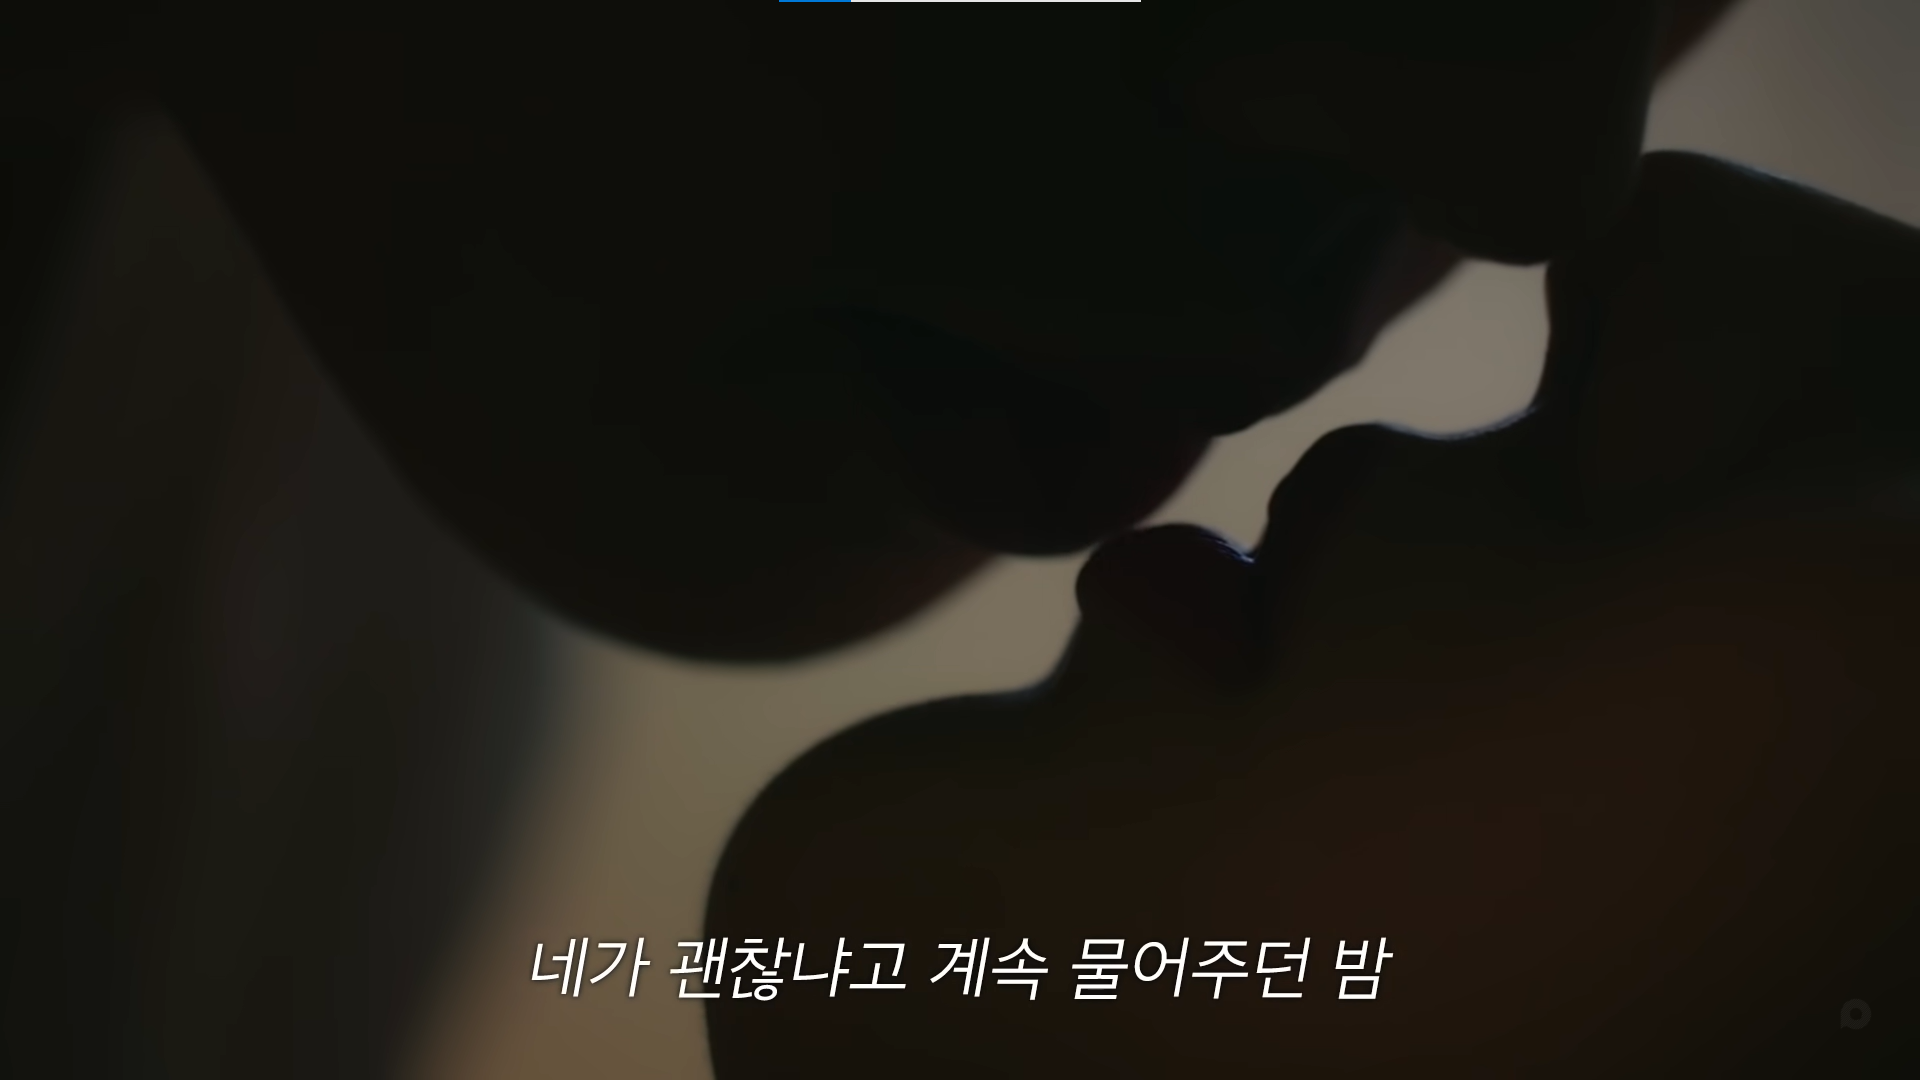 Korean Shows With Explicit Sex Scenes